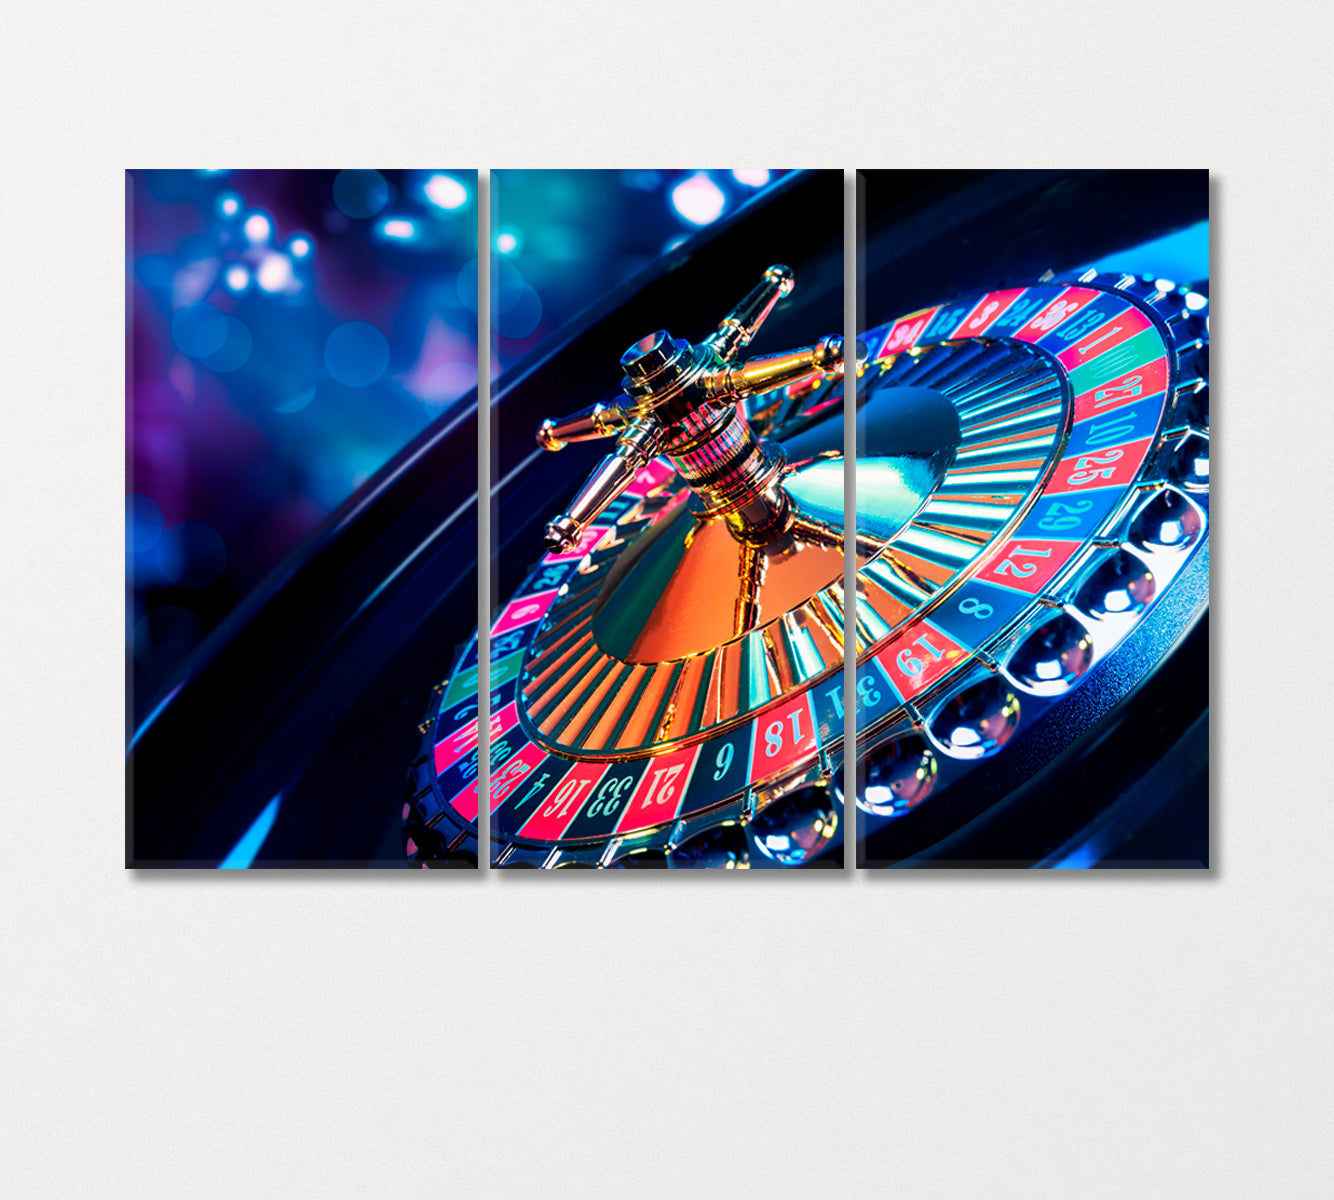 Spinning Сasino Roulette Canvas Print-Canvas Print-CetArt-3 Panels-36x24 inches-CetArt